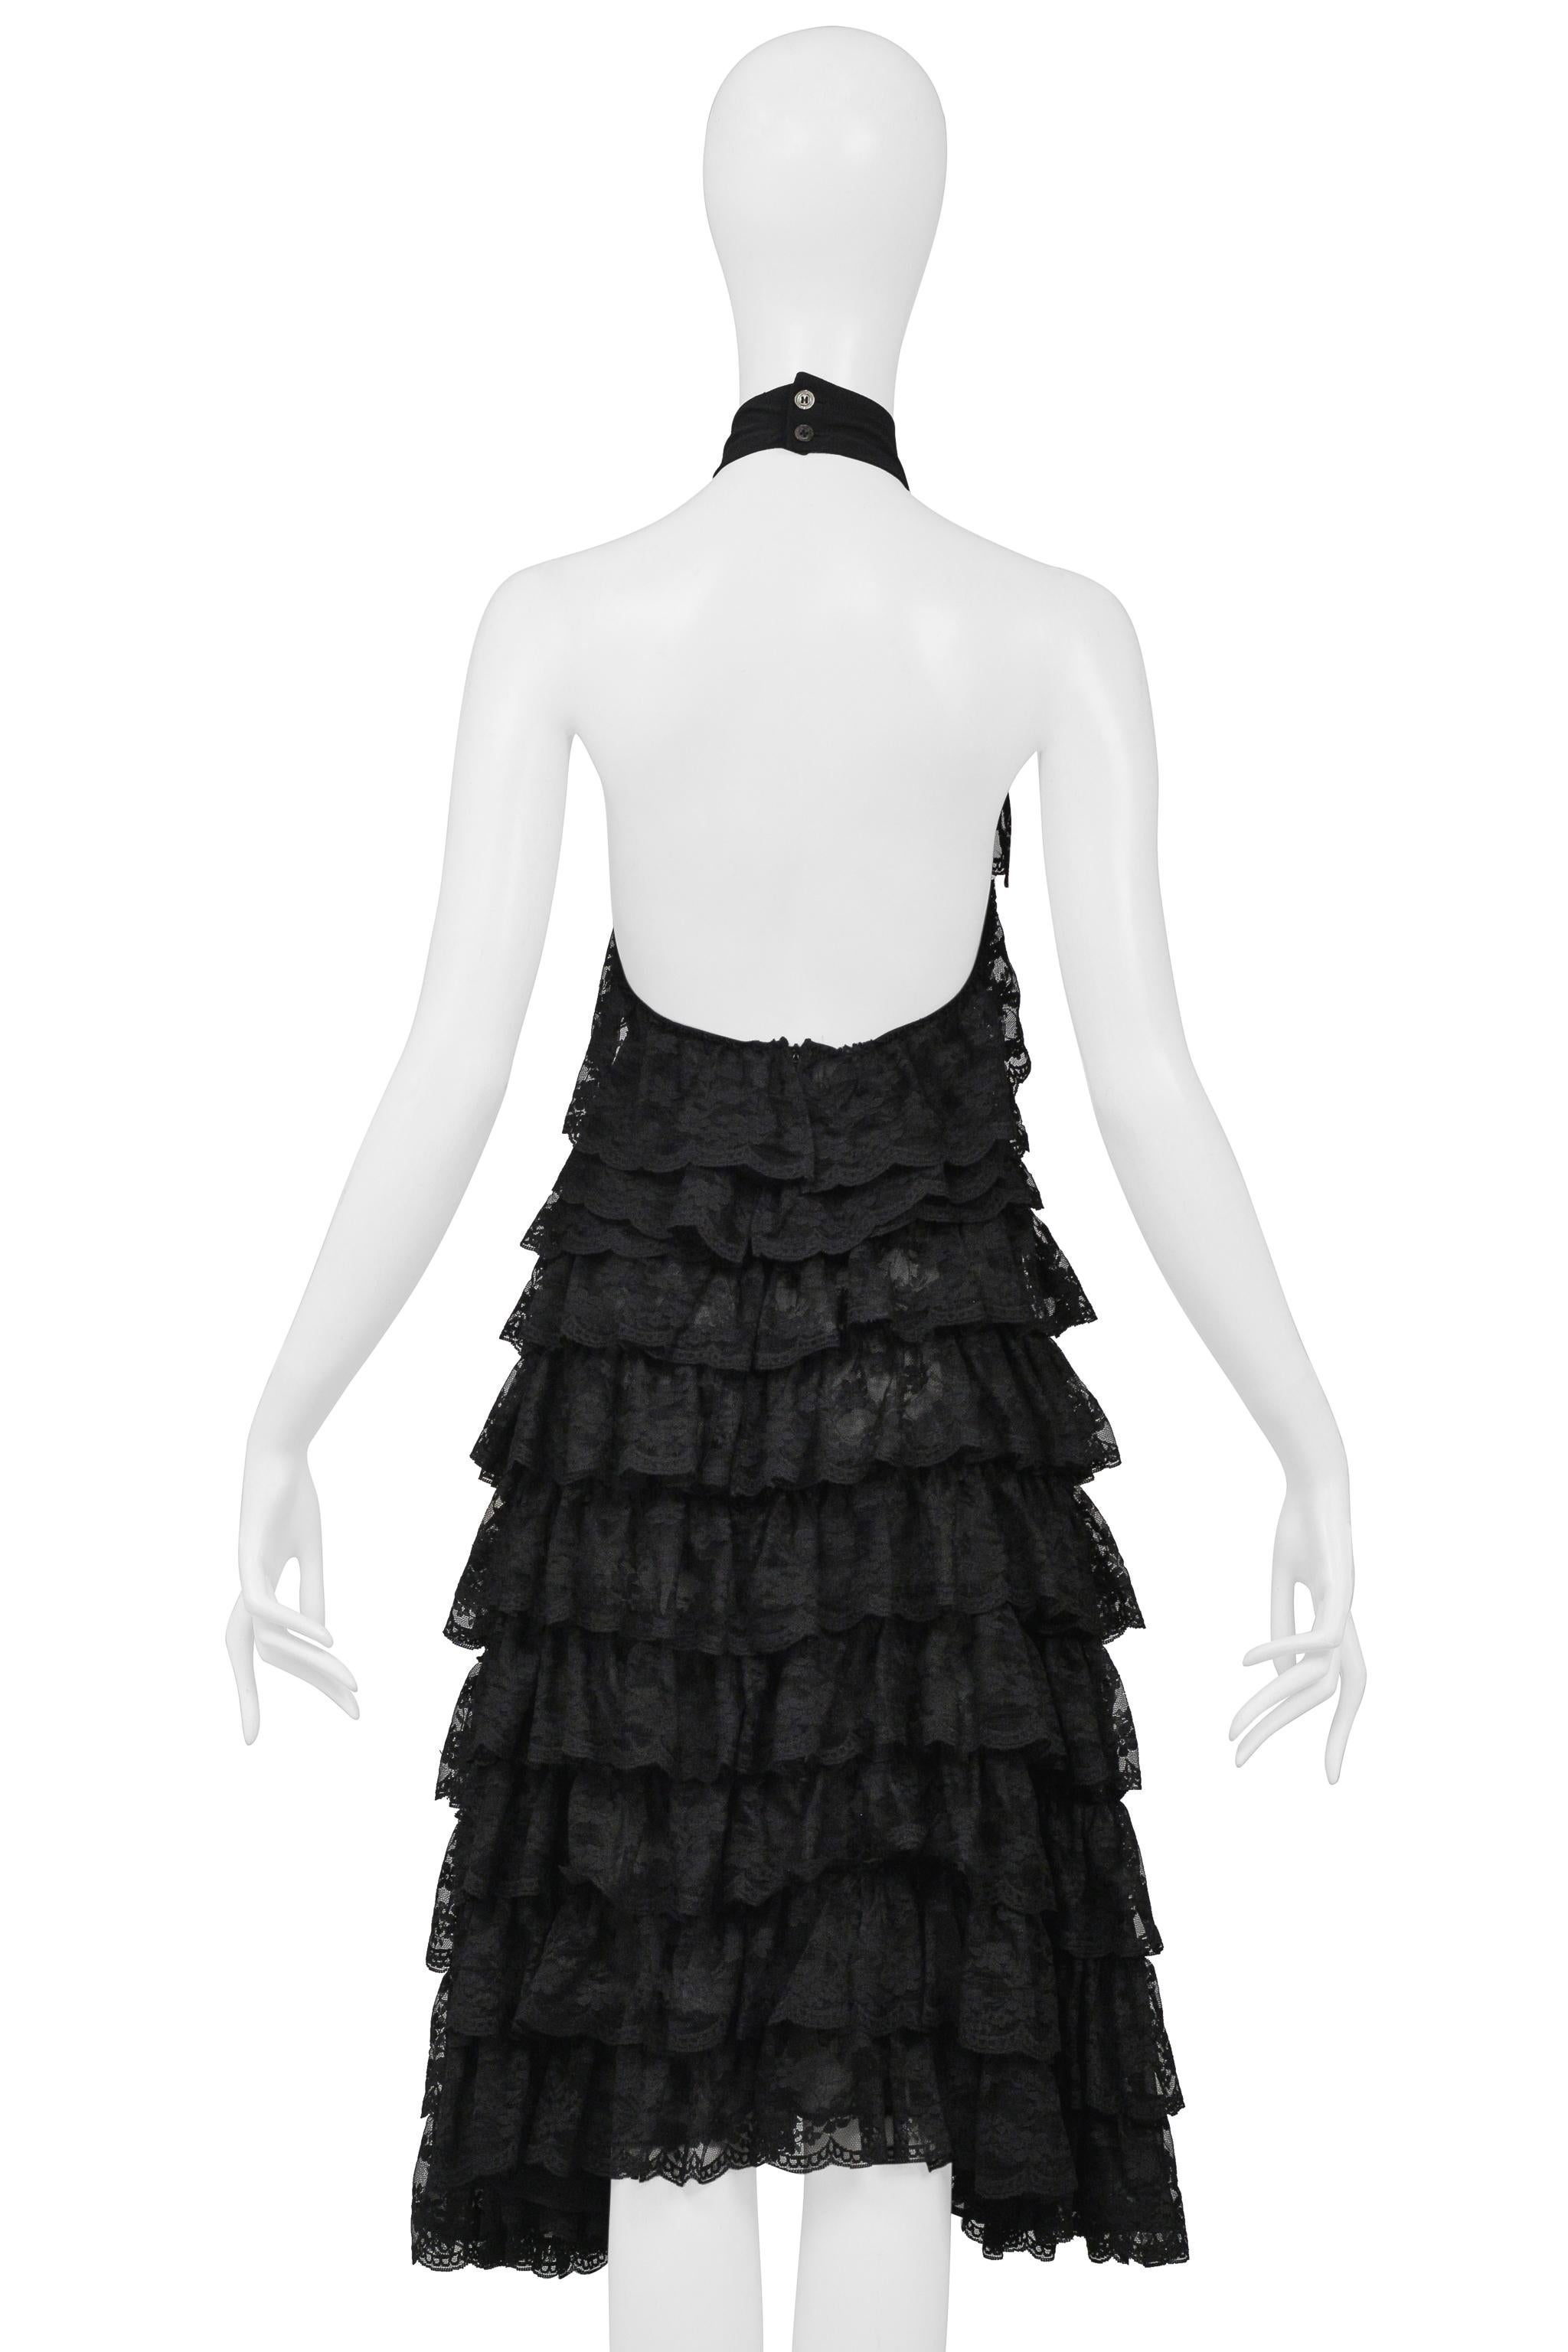 Iconic Alexander McQueen Black Lace Ruffle Runway Dress 1999 5